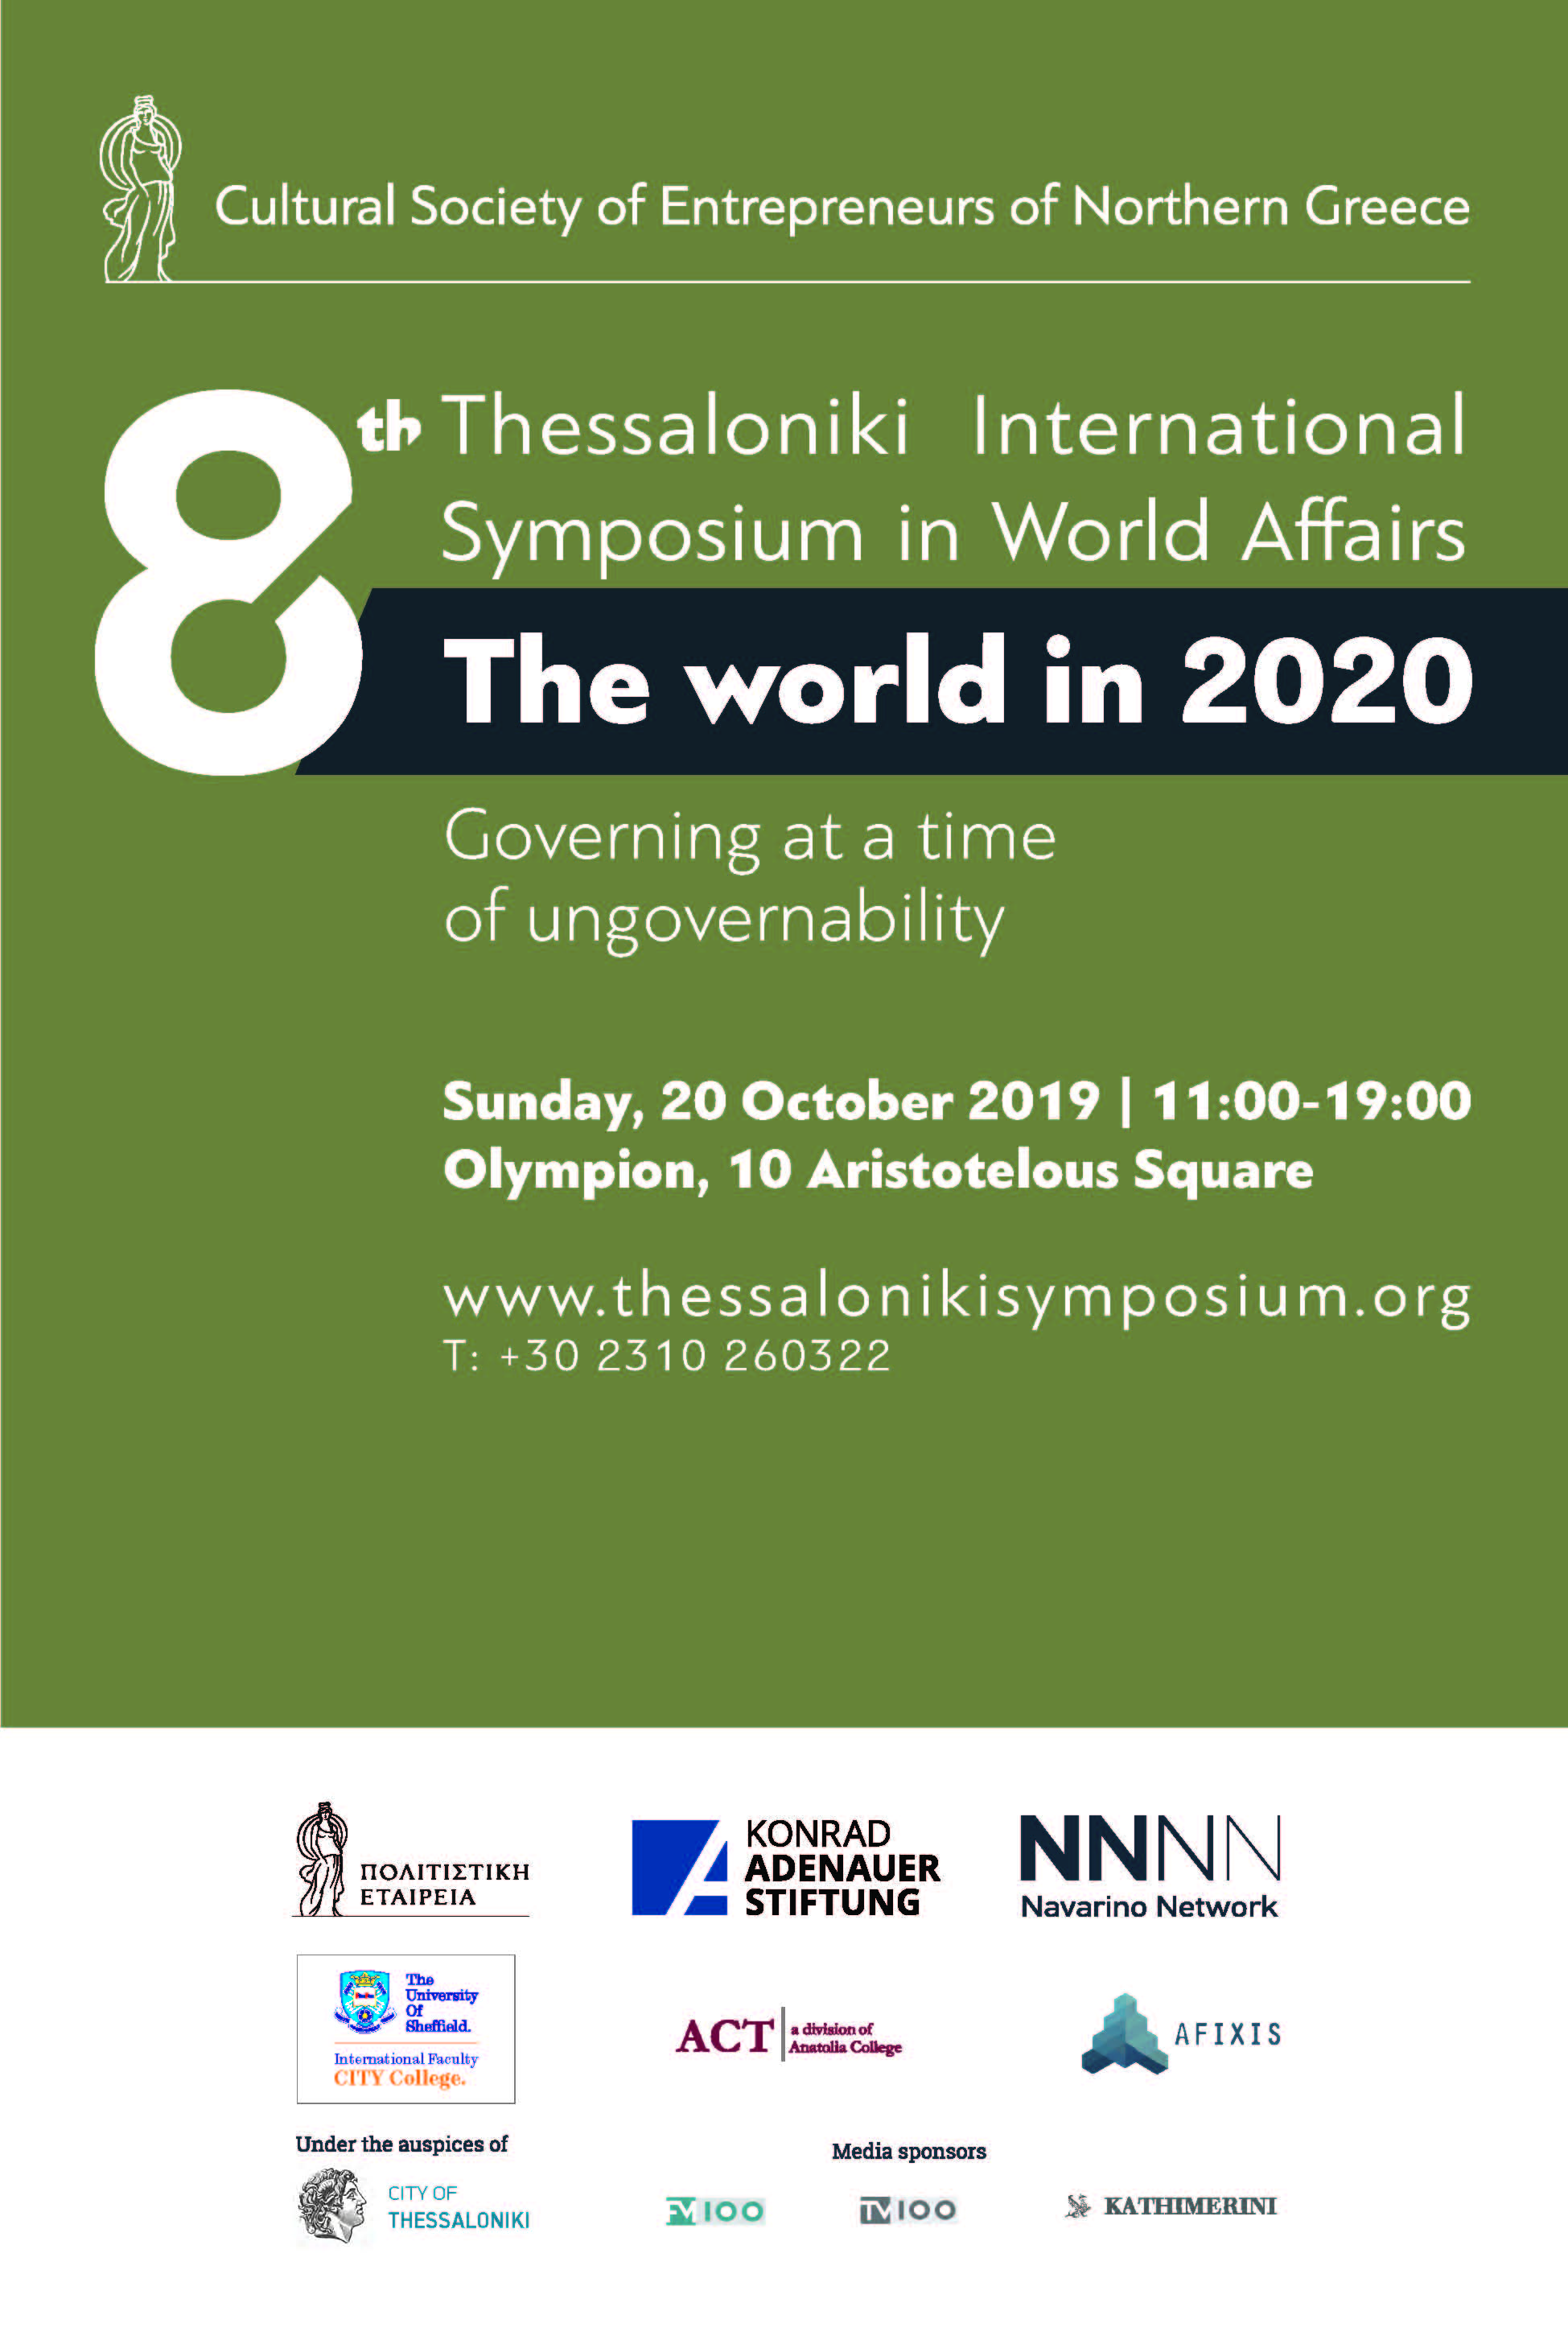 8th Thessaloniki International Symposium in World Affairs